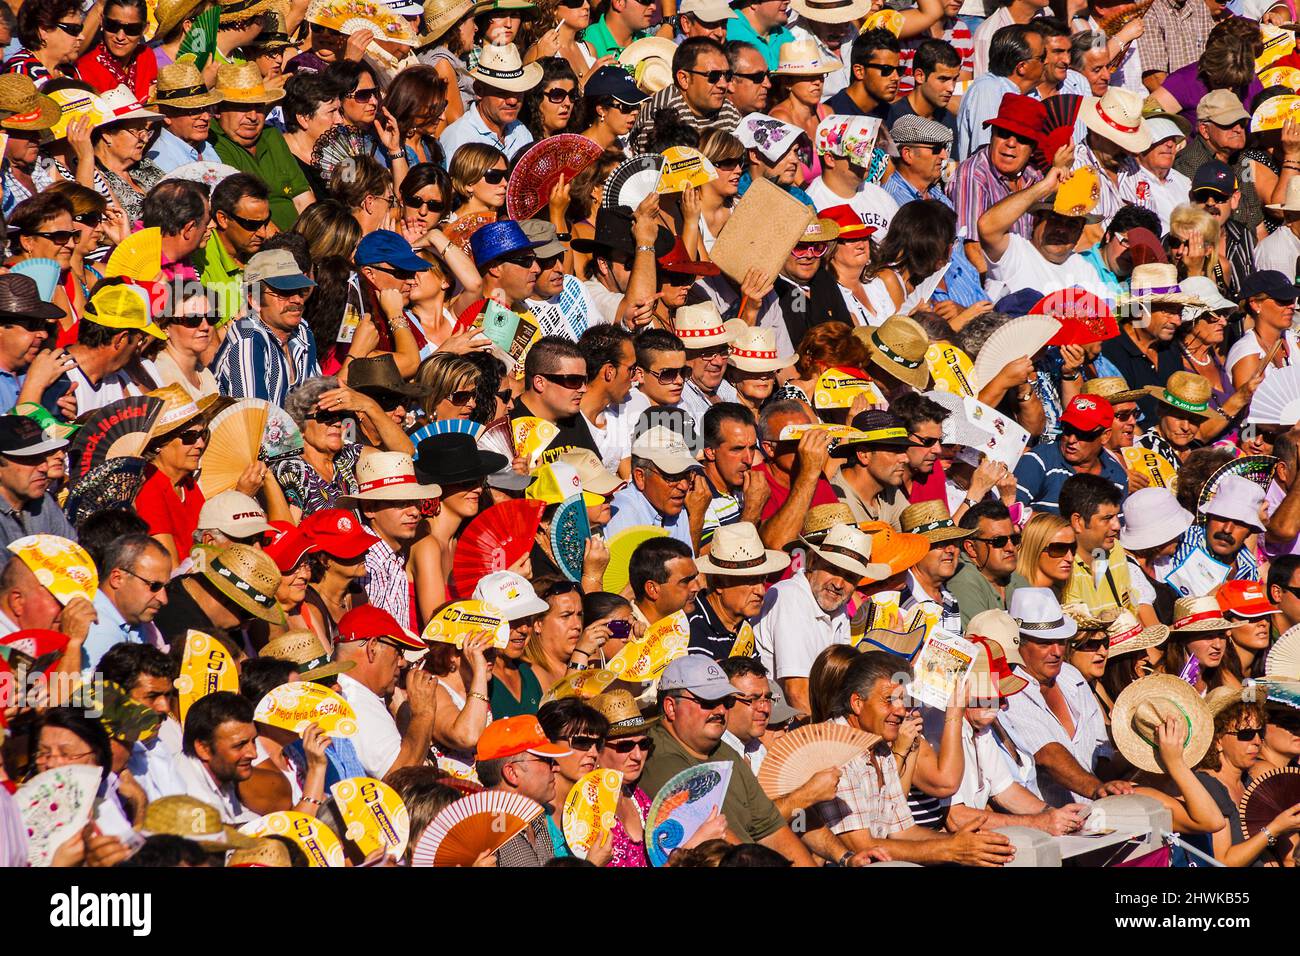 Bullfighting crowd, Spain Stock Photo